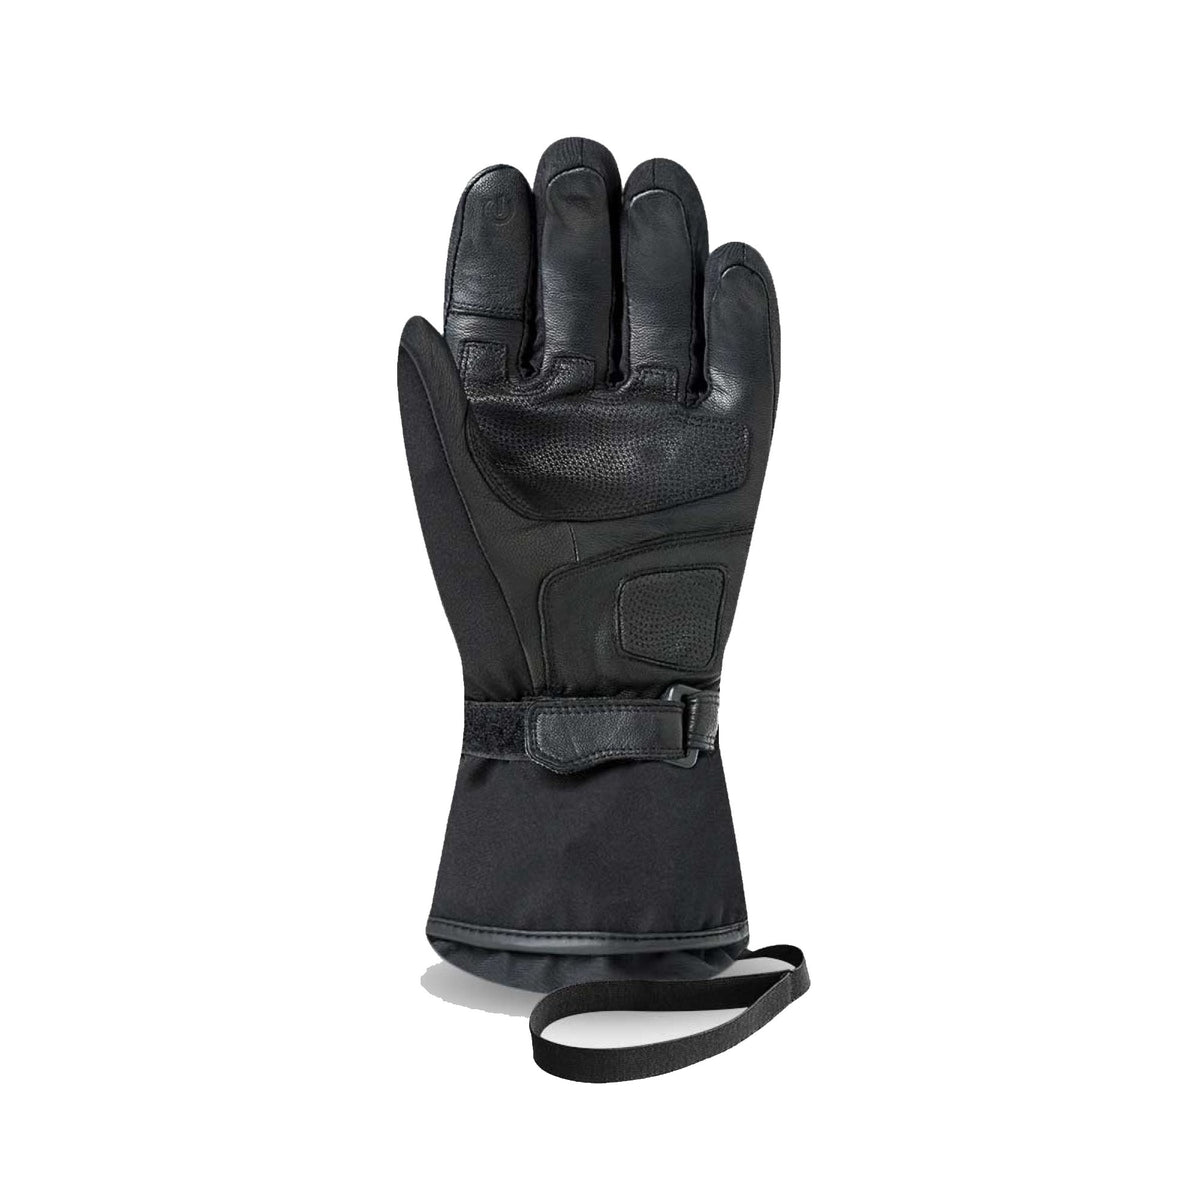 Kombi Sous-gants Chauffants Warm-Up Unisexe – Oberson